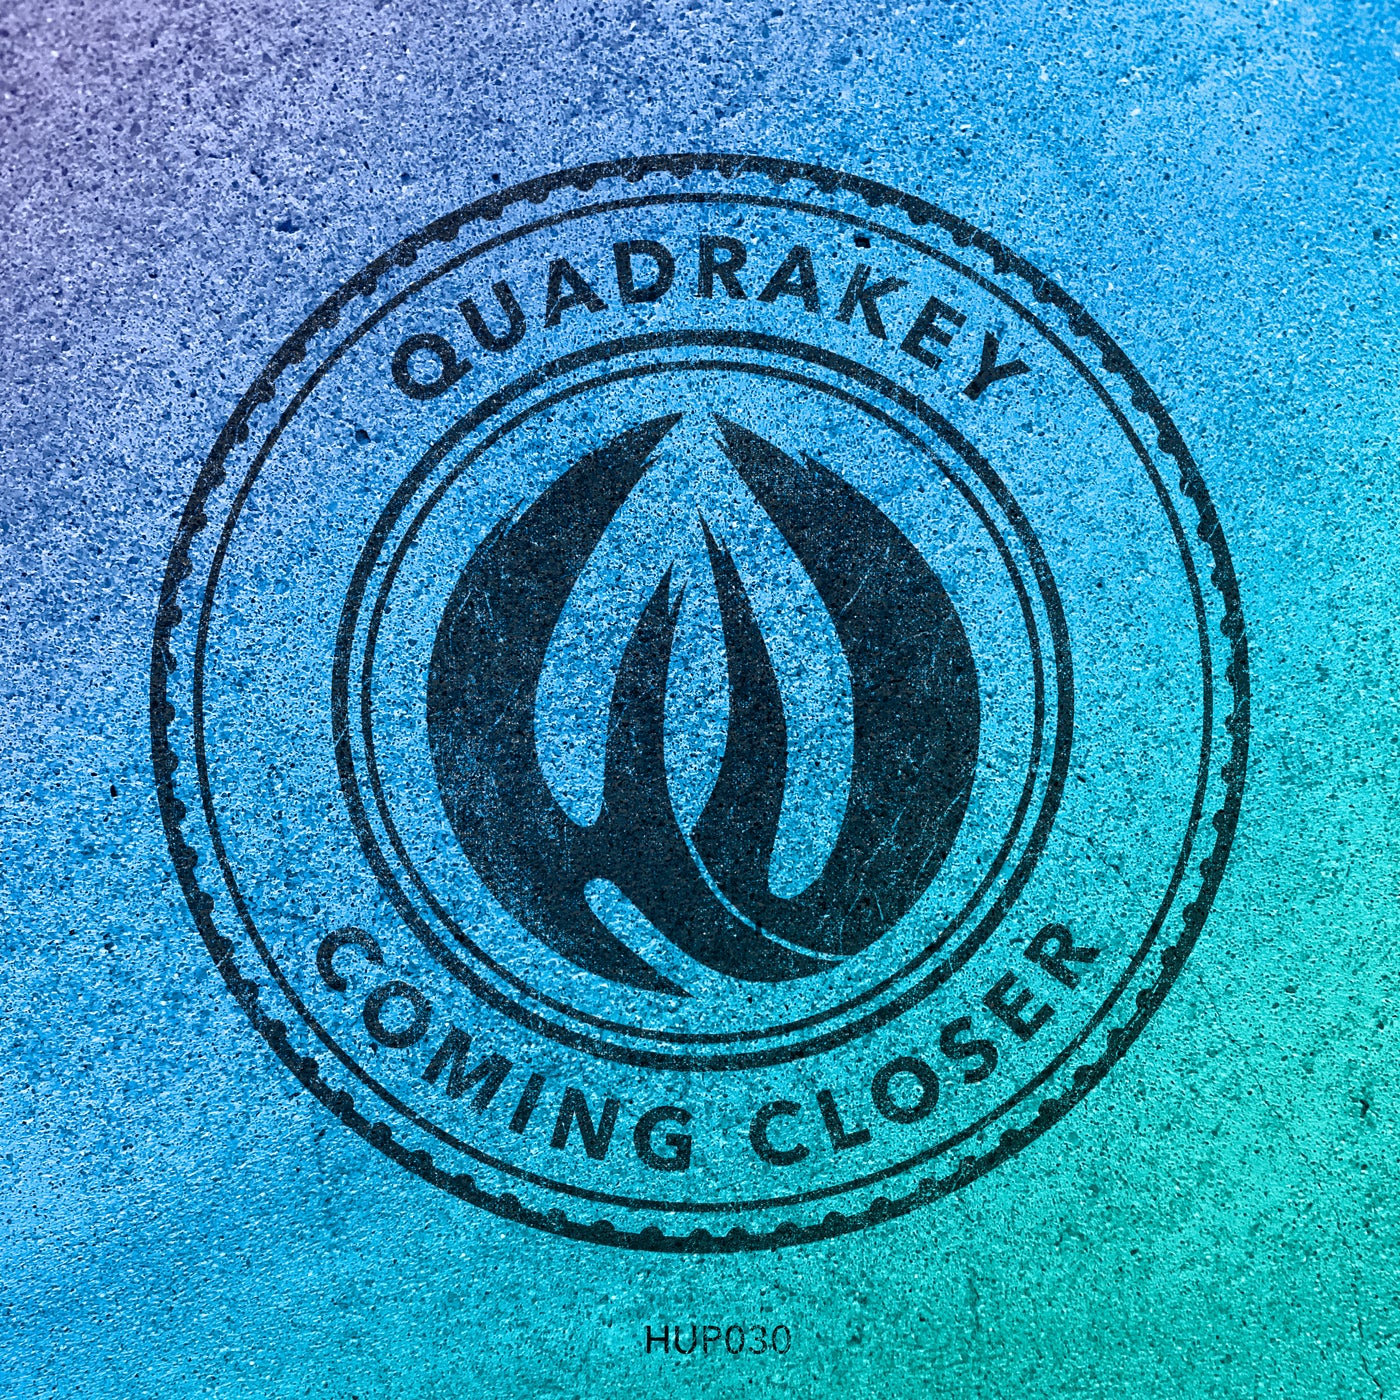 image cover: Quadrakey - Coming Closer / HUP030